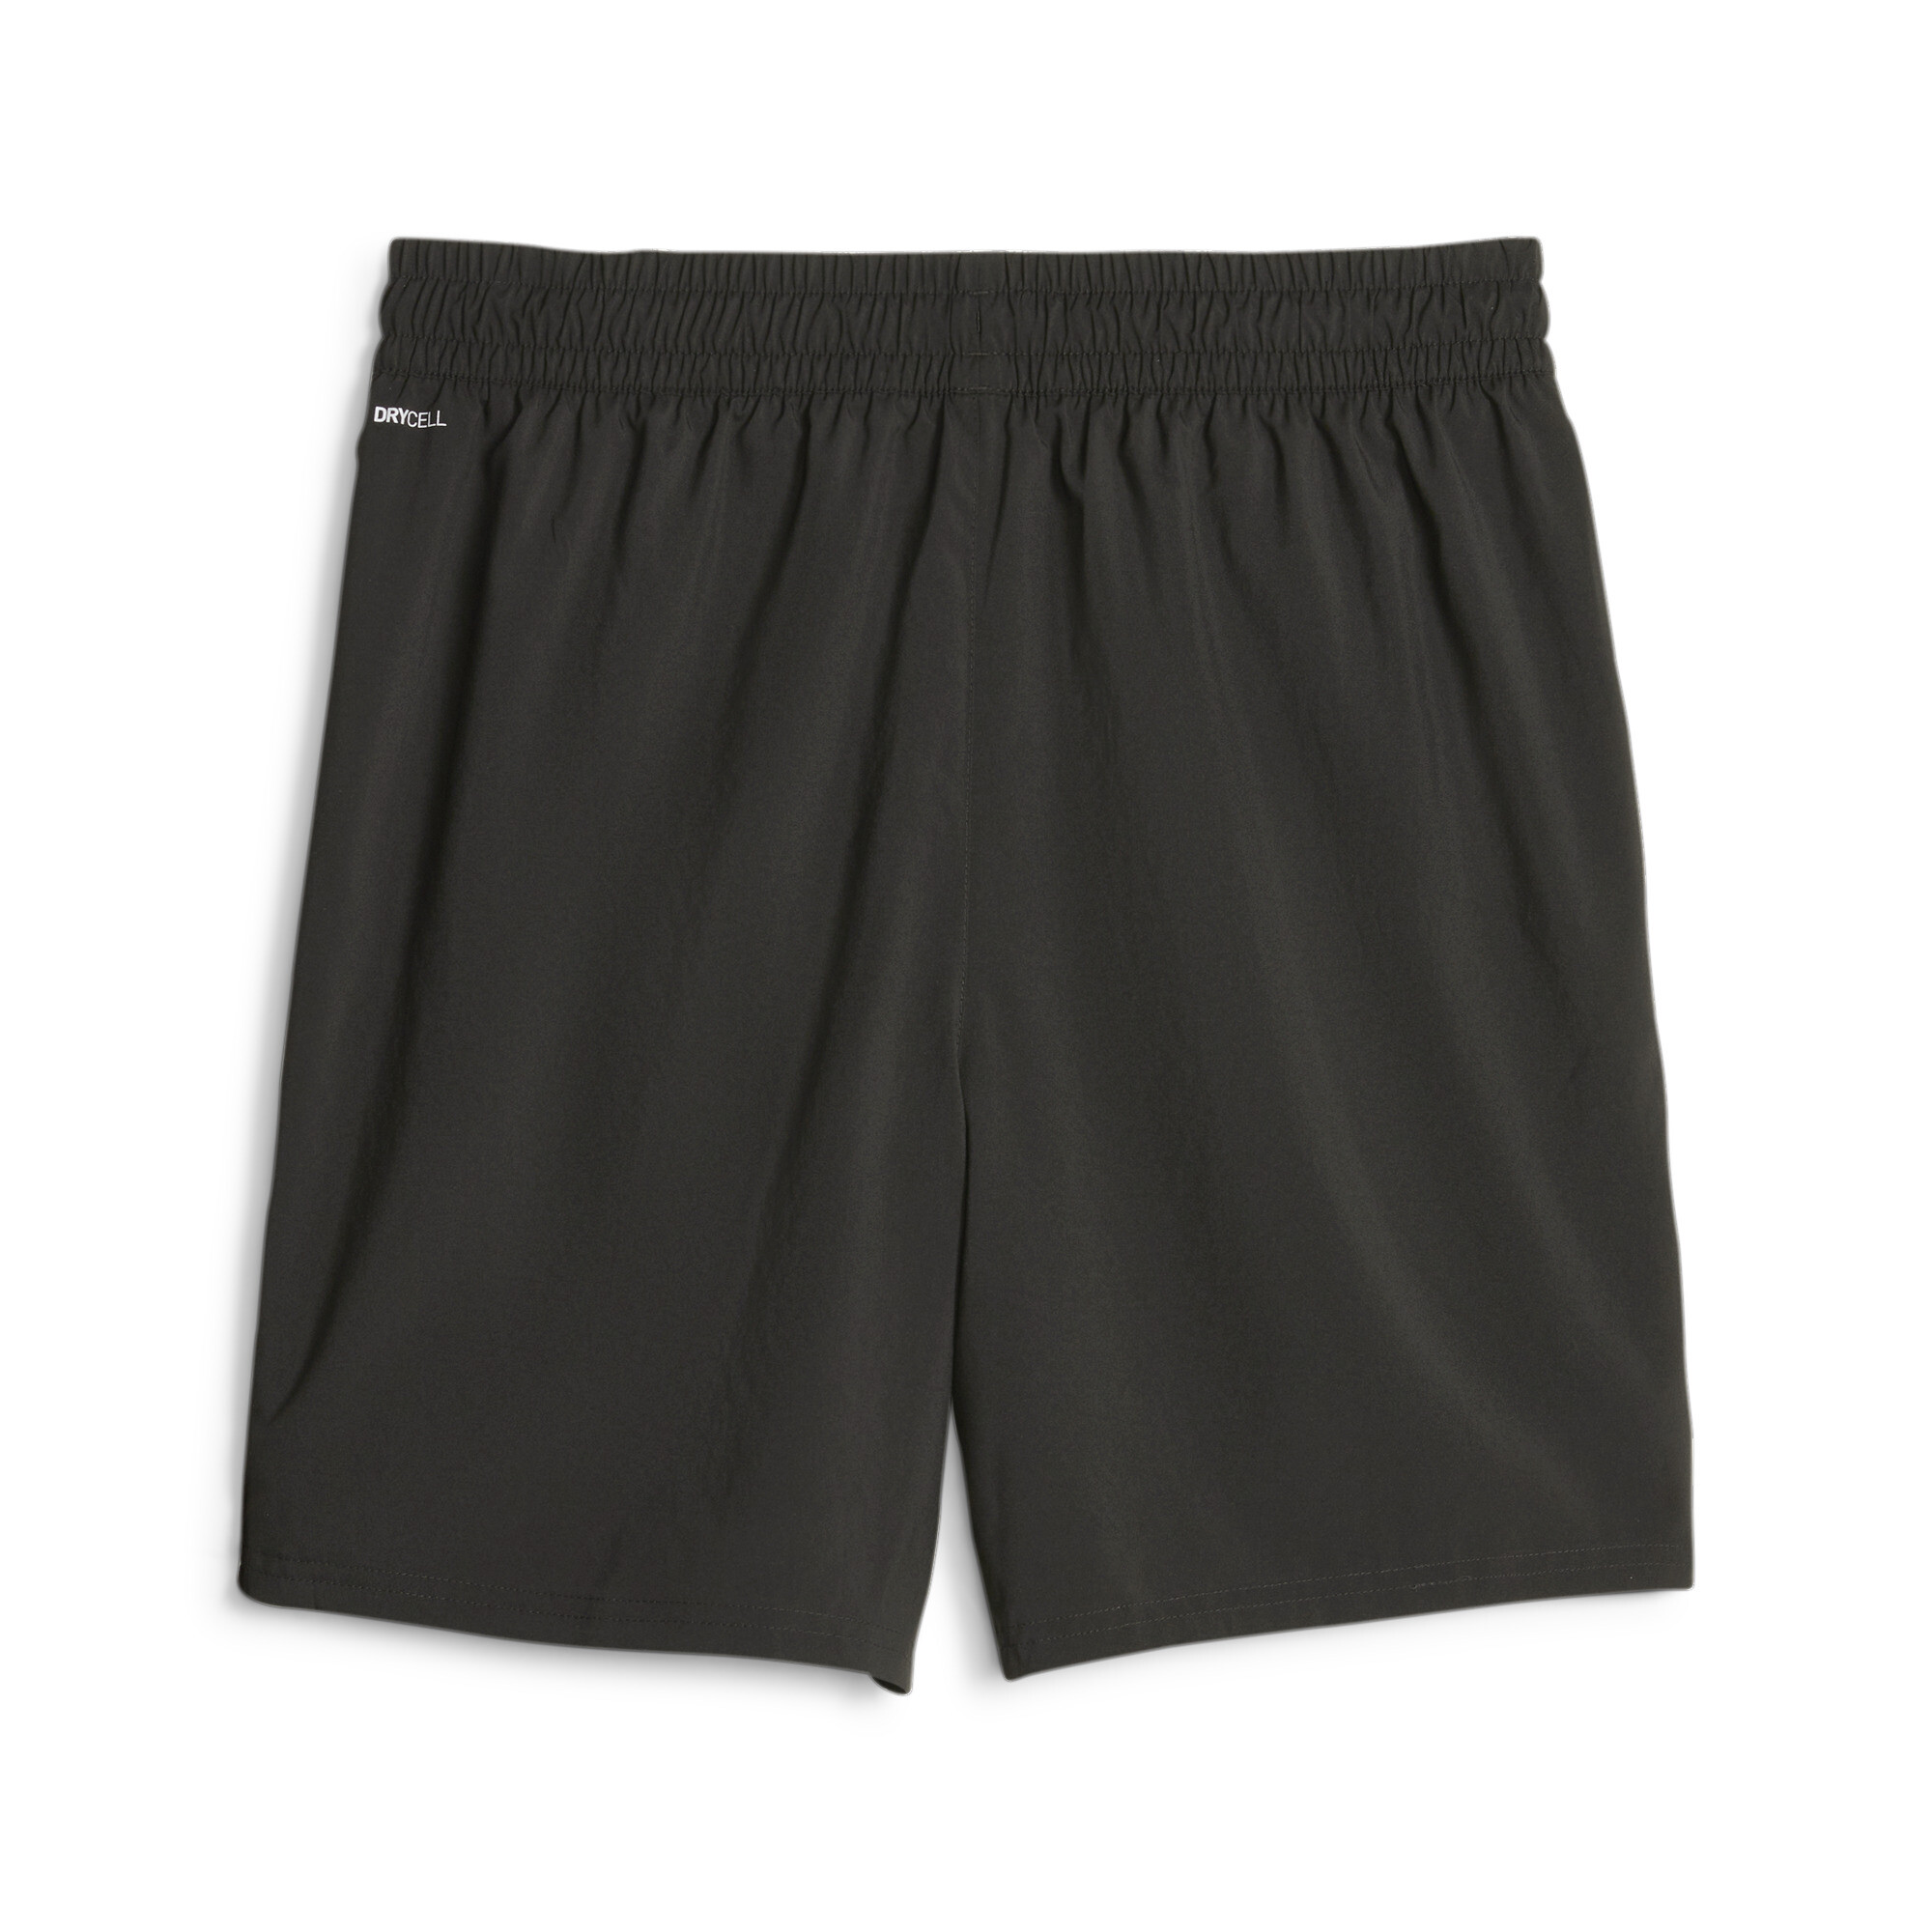 Men's PUMA Fit 7 Training Shorts In Black, Size Large